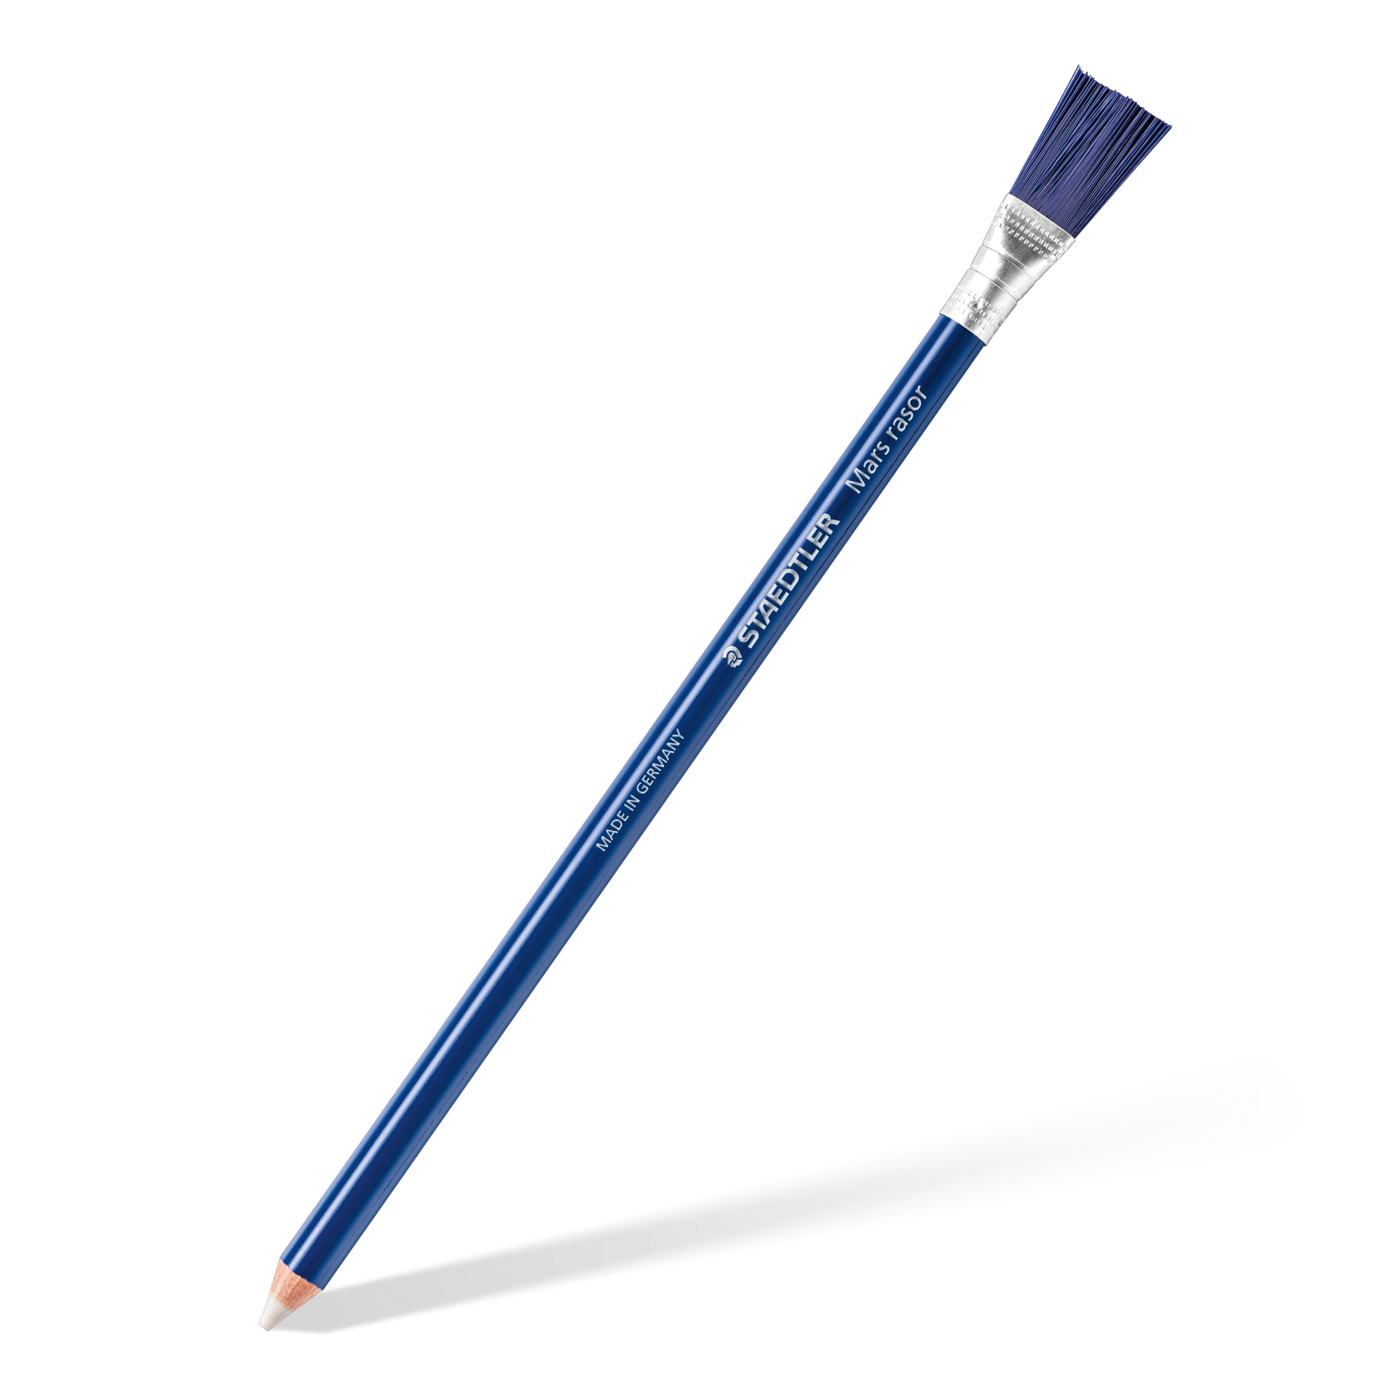 Staedtler Eraser with Brush for Erasing Ballpoint Pens and Drawing Inks 52661